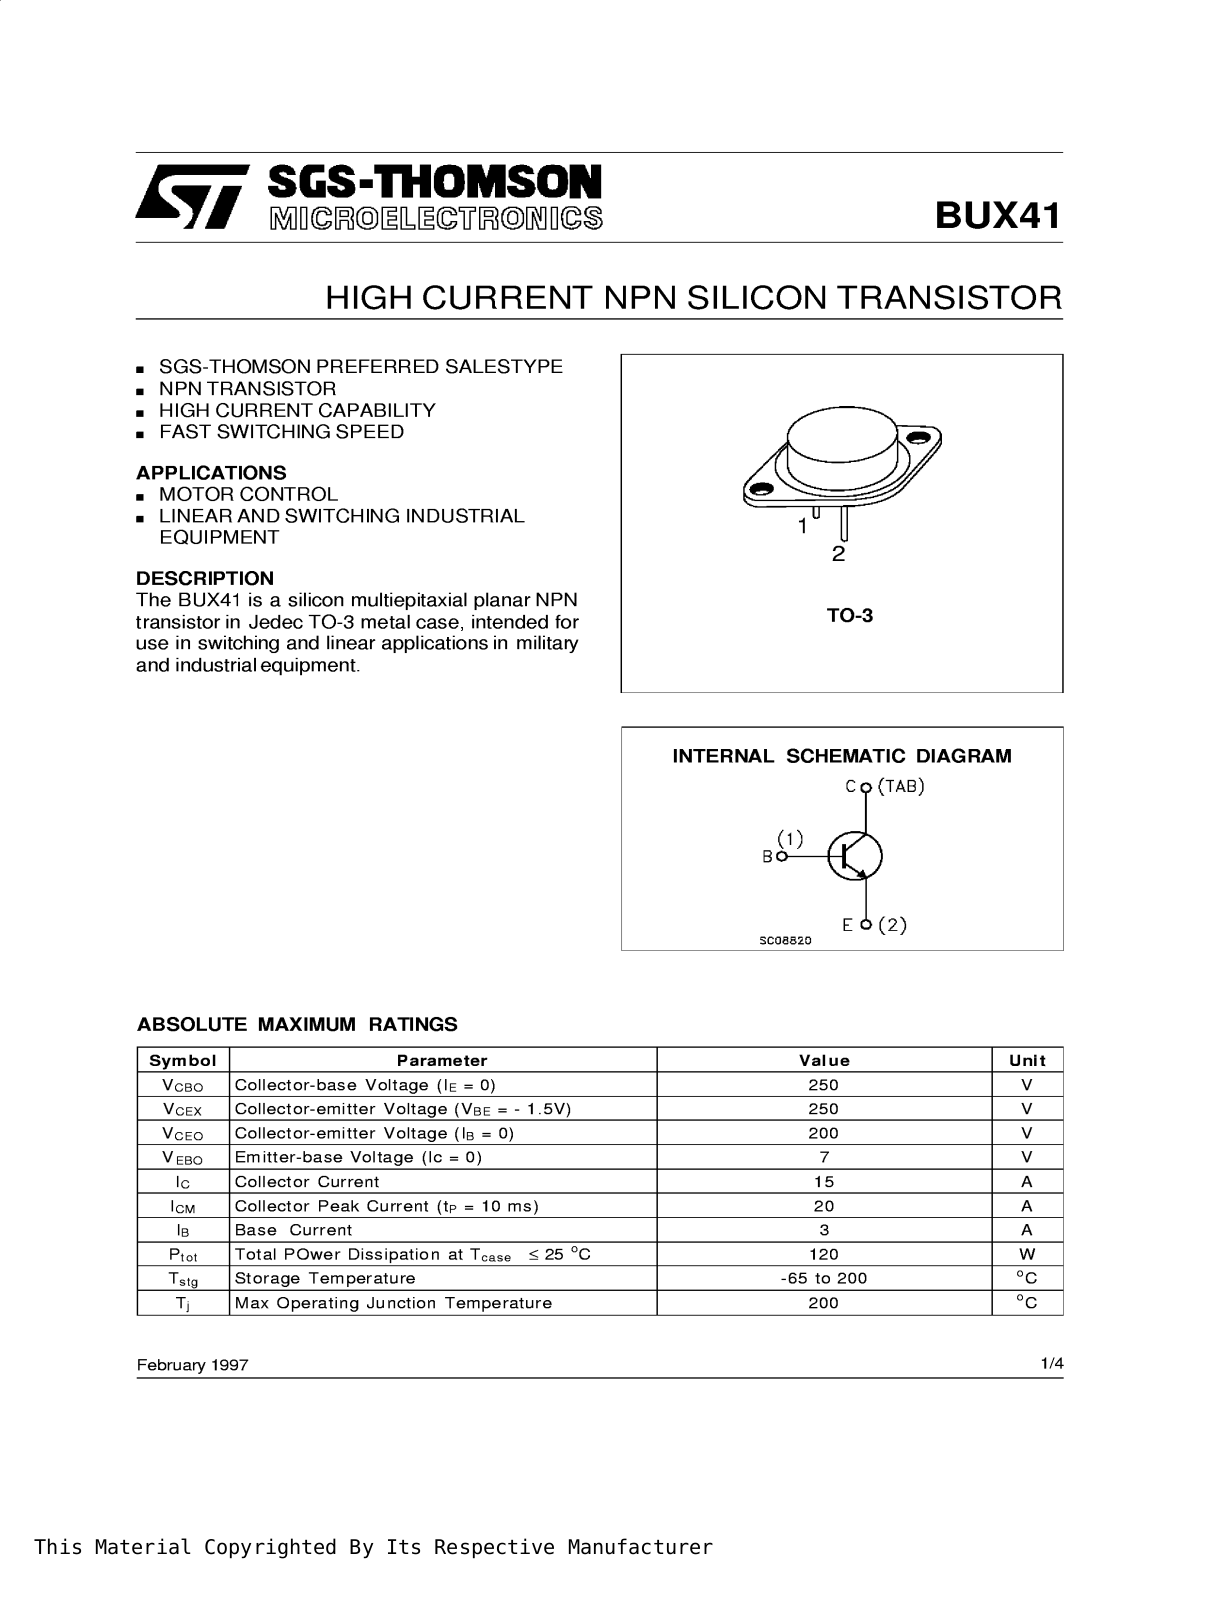 SGS Thomson Microelectronics BUX41 Datasheet